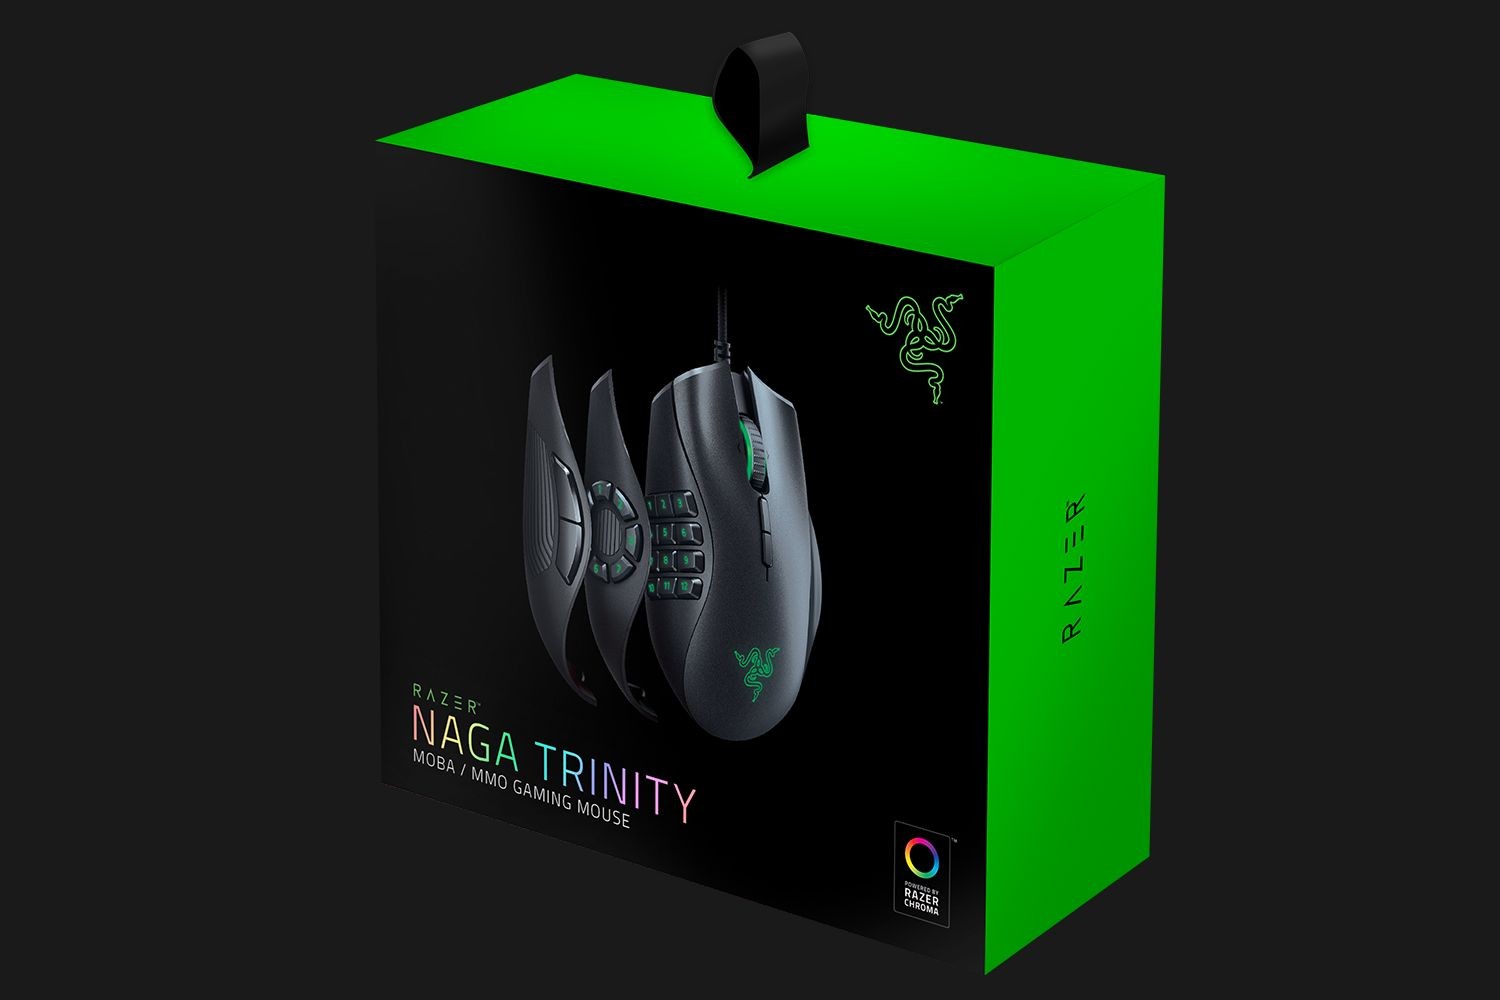 Razer Naga Trinity gaming mouse